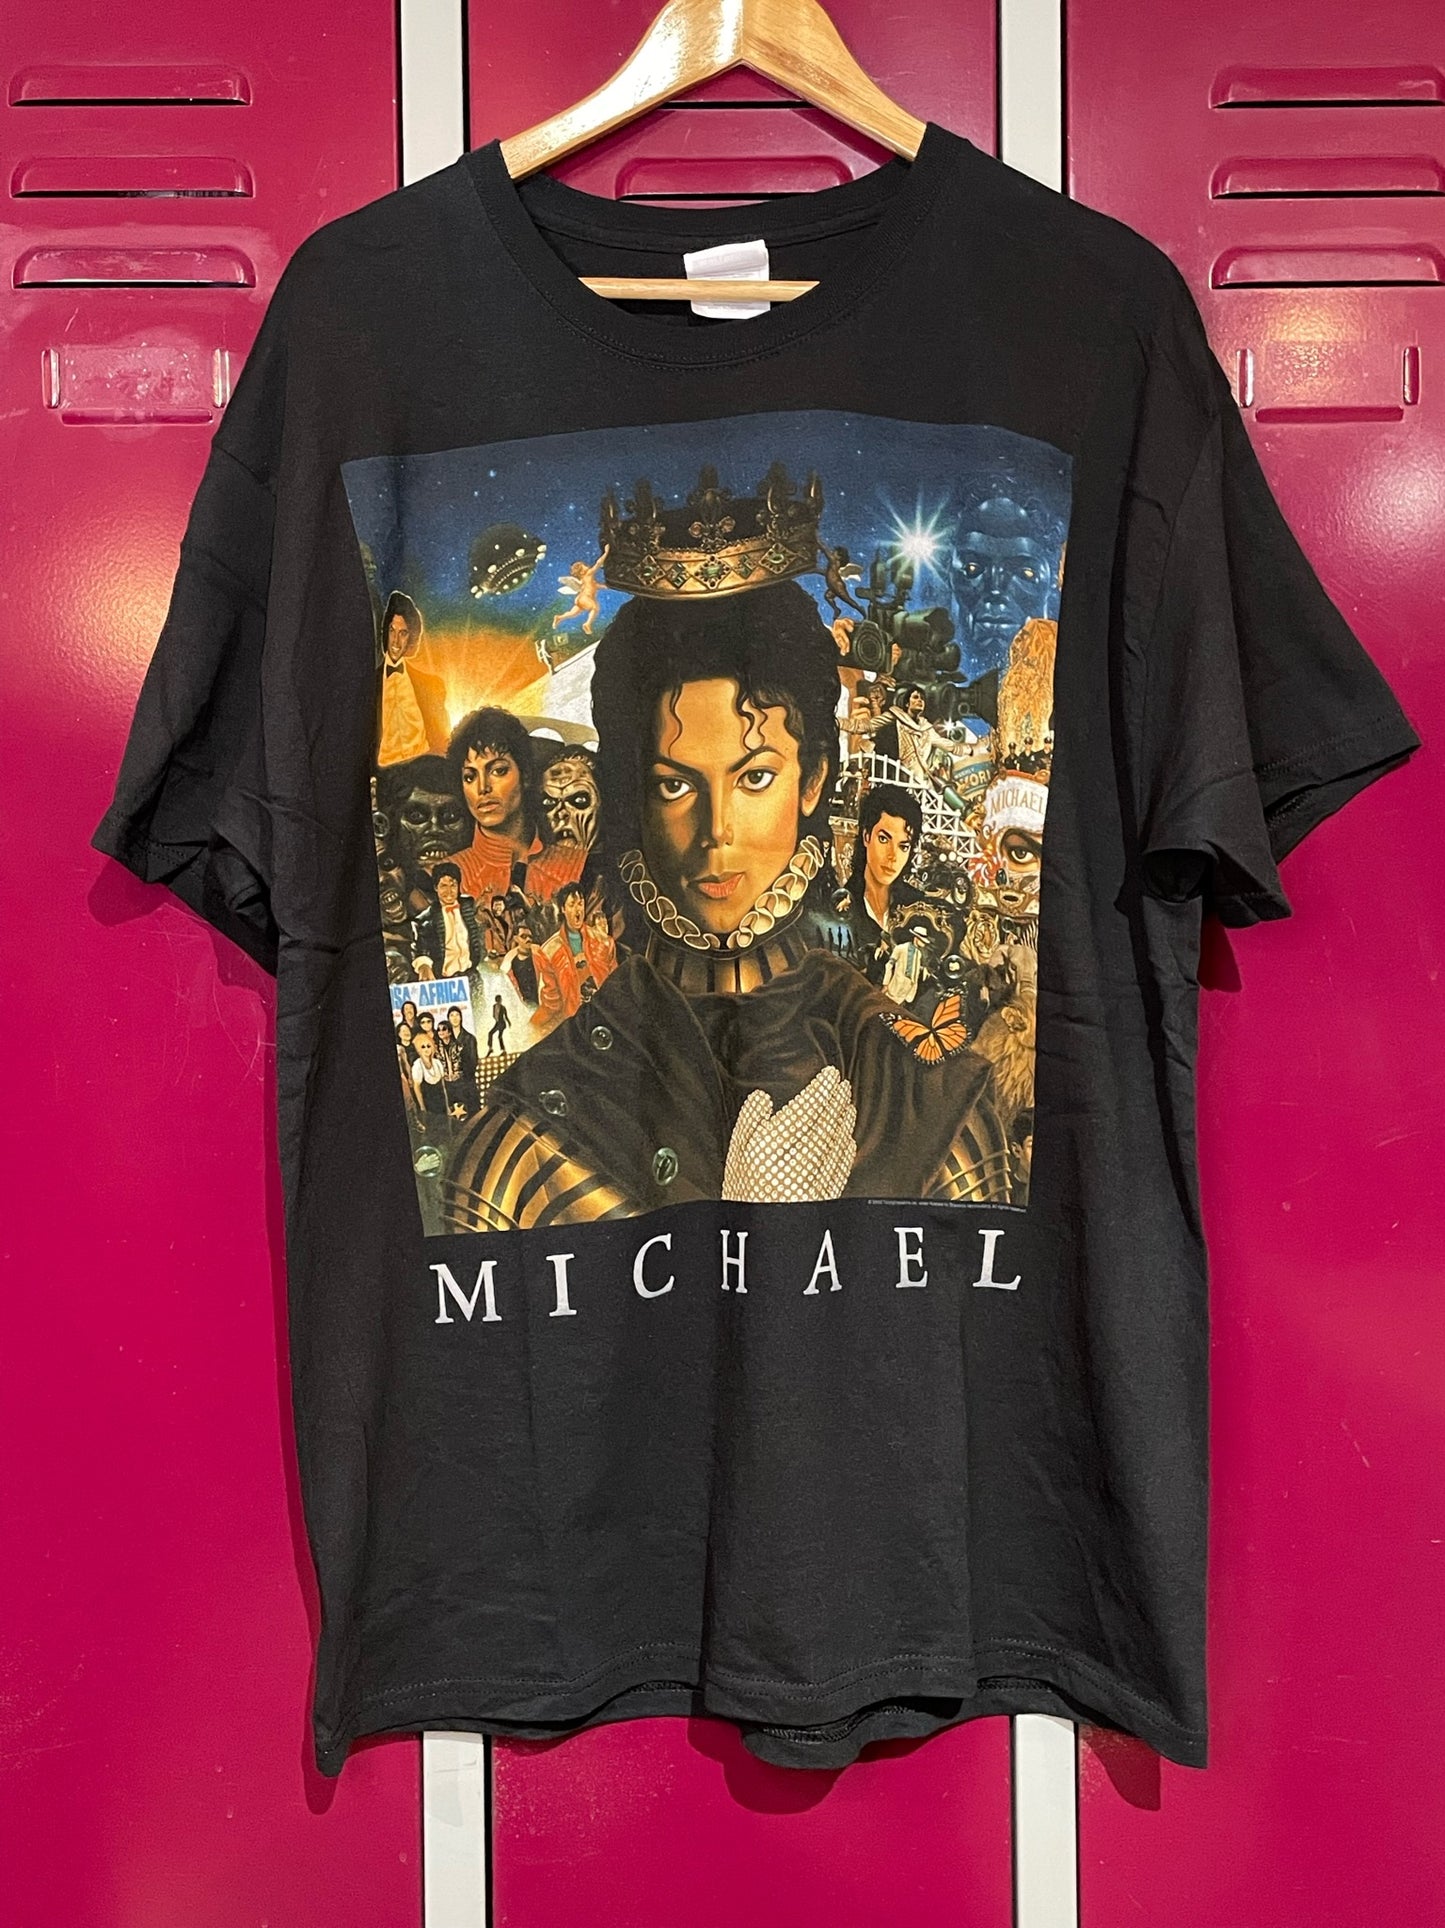 MICHAEL JACKSON "MICHAEL" MUSIC BAND T-SHIRT  SZ: XL